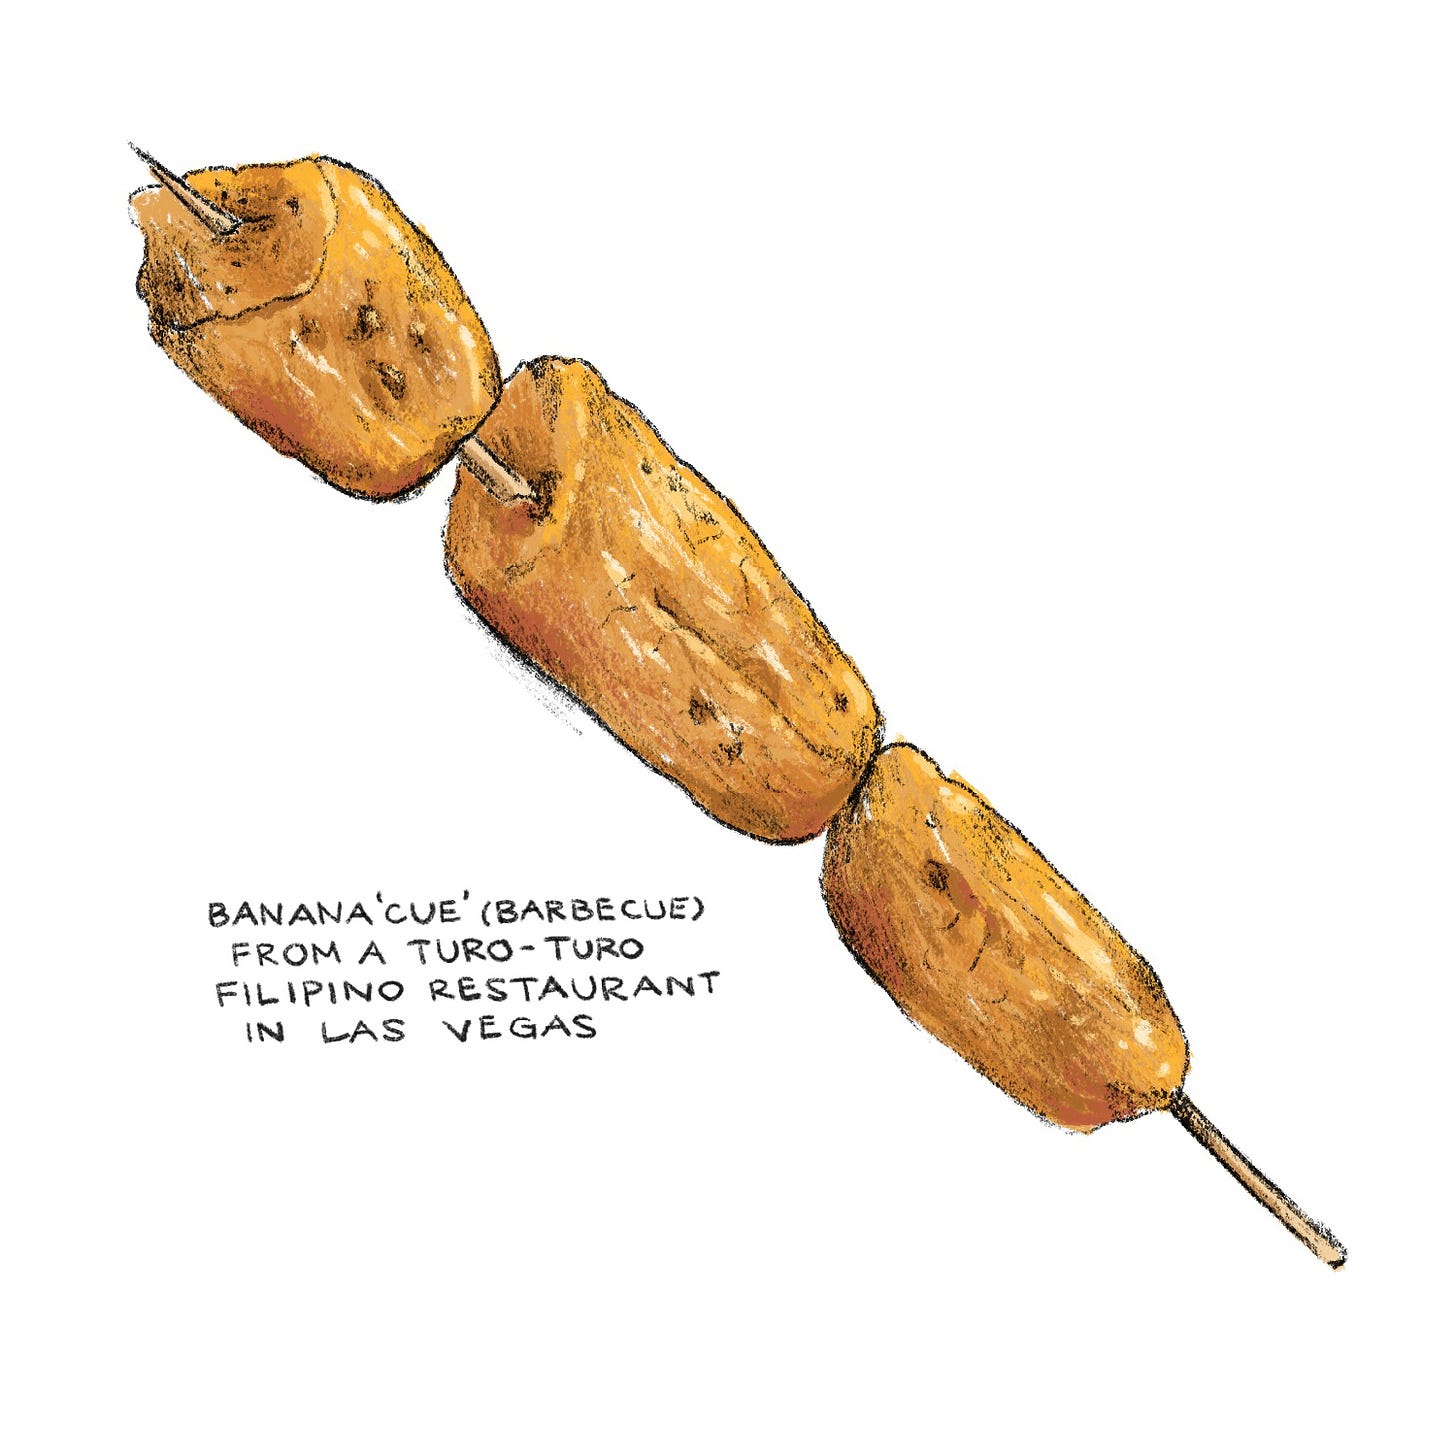 banana cue (barbecue) from a turo-turo Filipino restaurant in Las Vegas, a pencil illustration of banana fruits on a stick